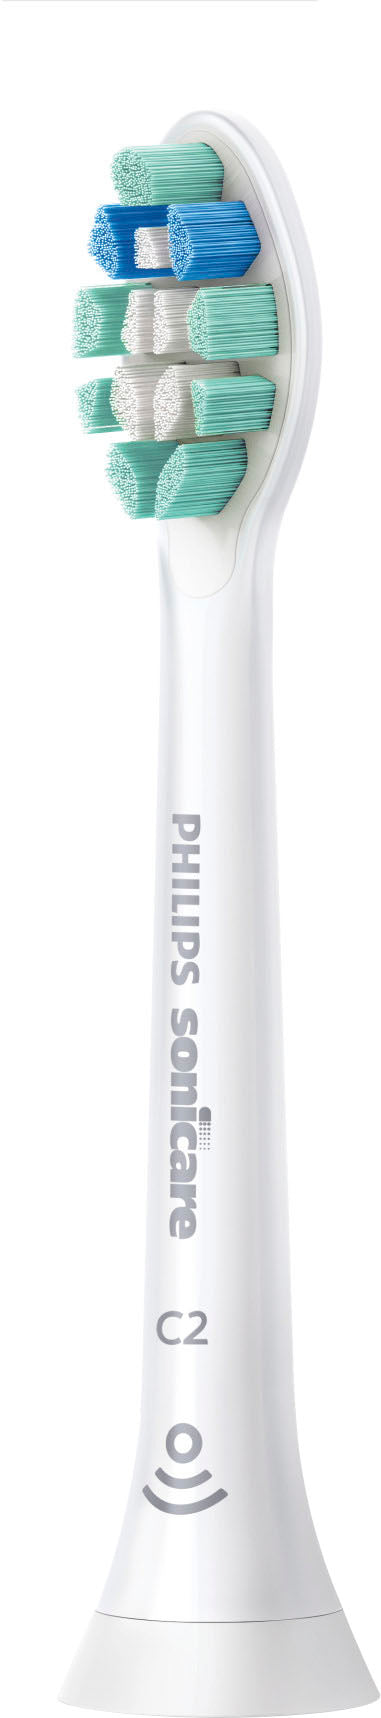 Philips Sonicare 4100 Power Toothbrush - White_9